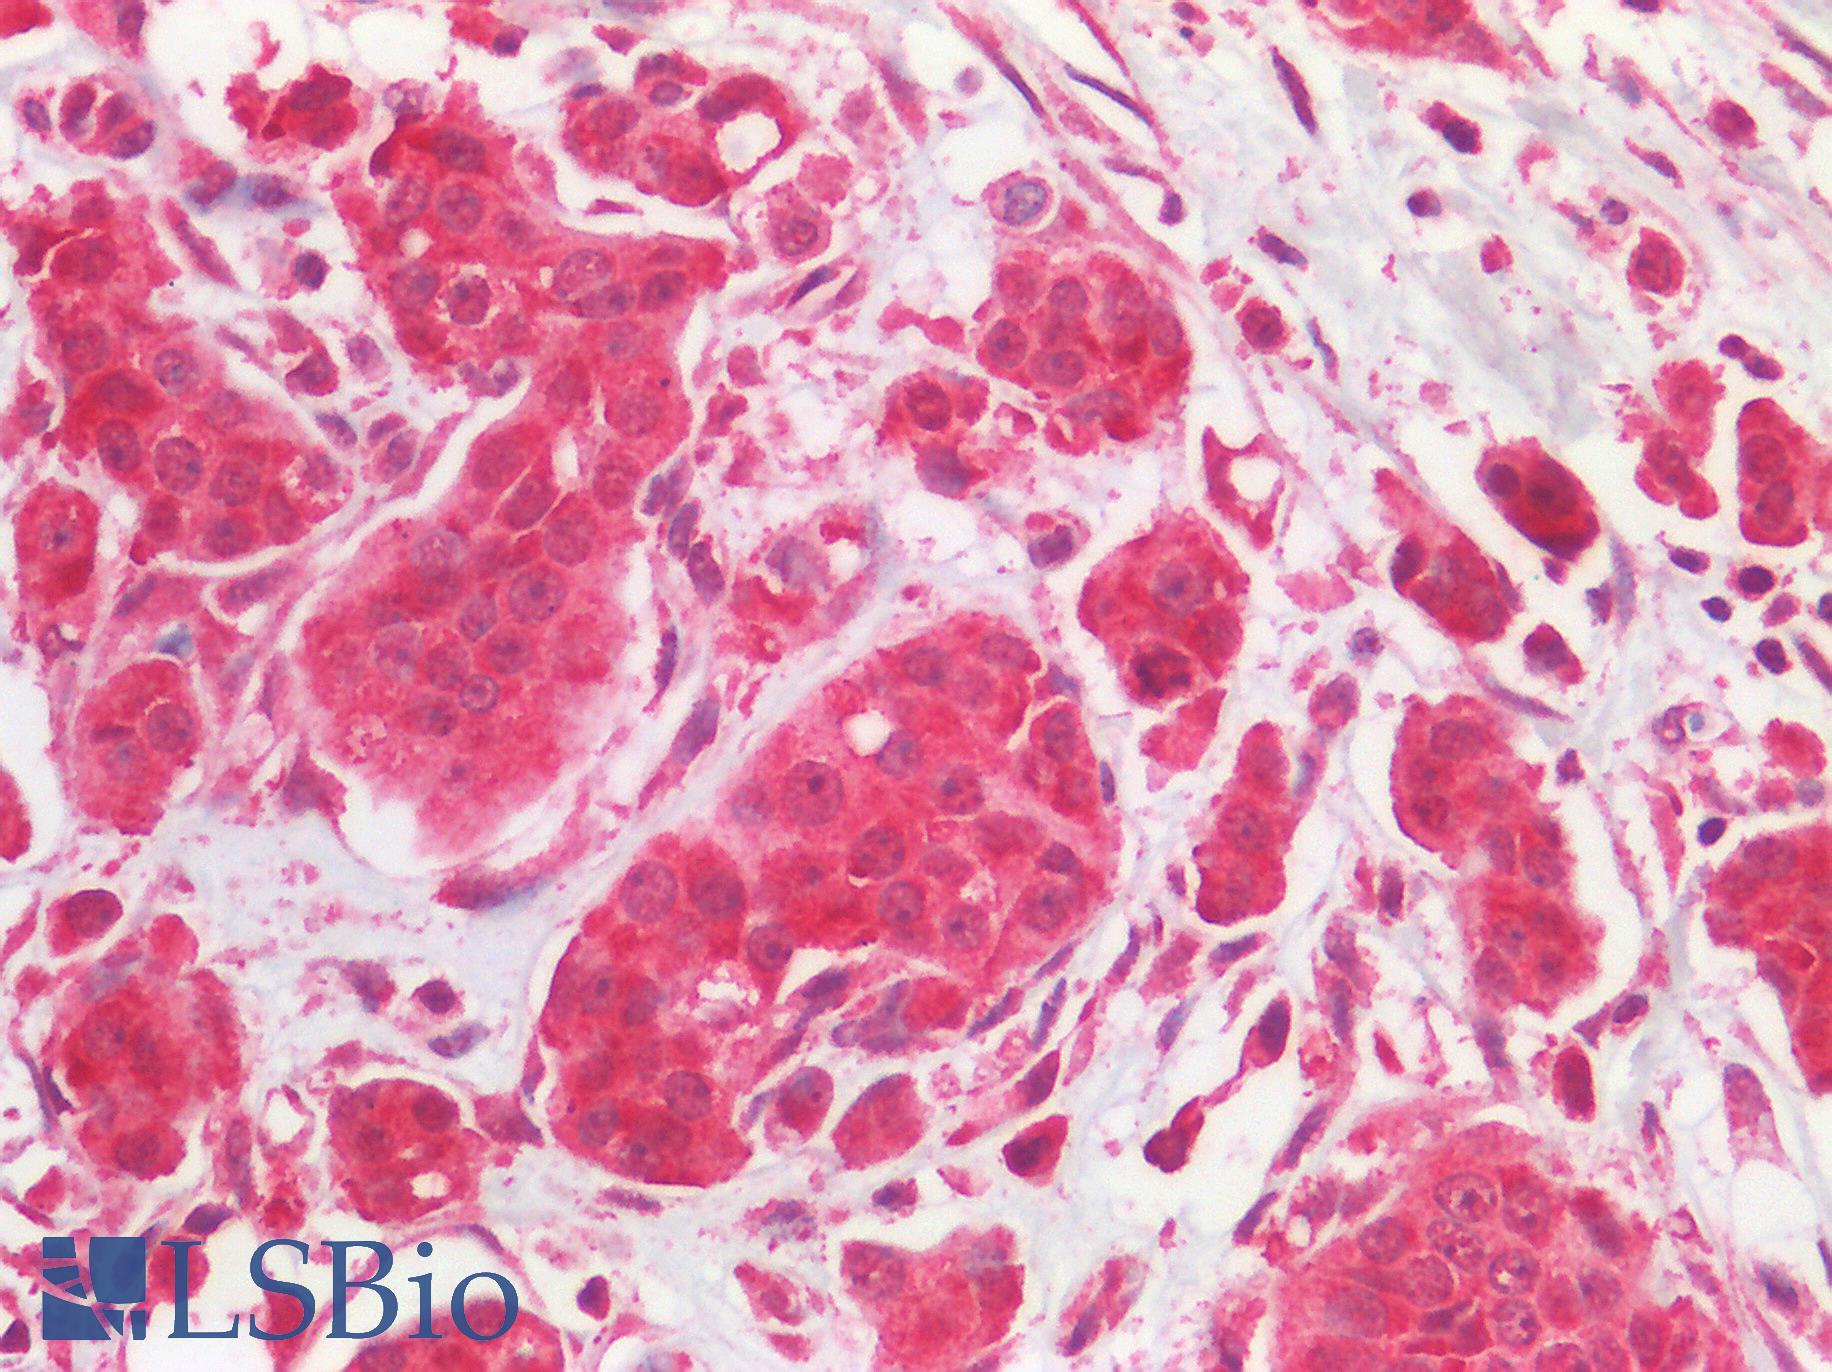 EGFR Antibody - Human Breast Carcinoma: Formalin-Fixed, Paraffin-Embedded (FFPE)